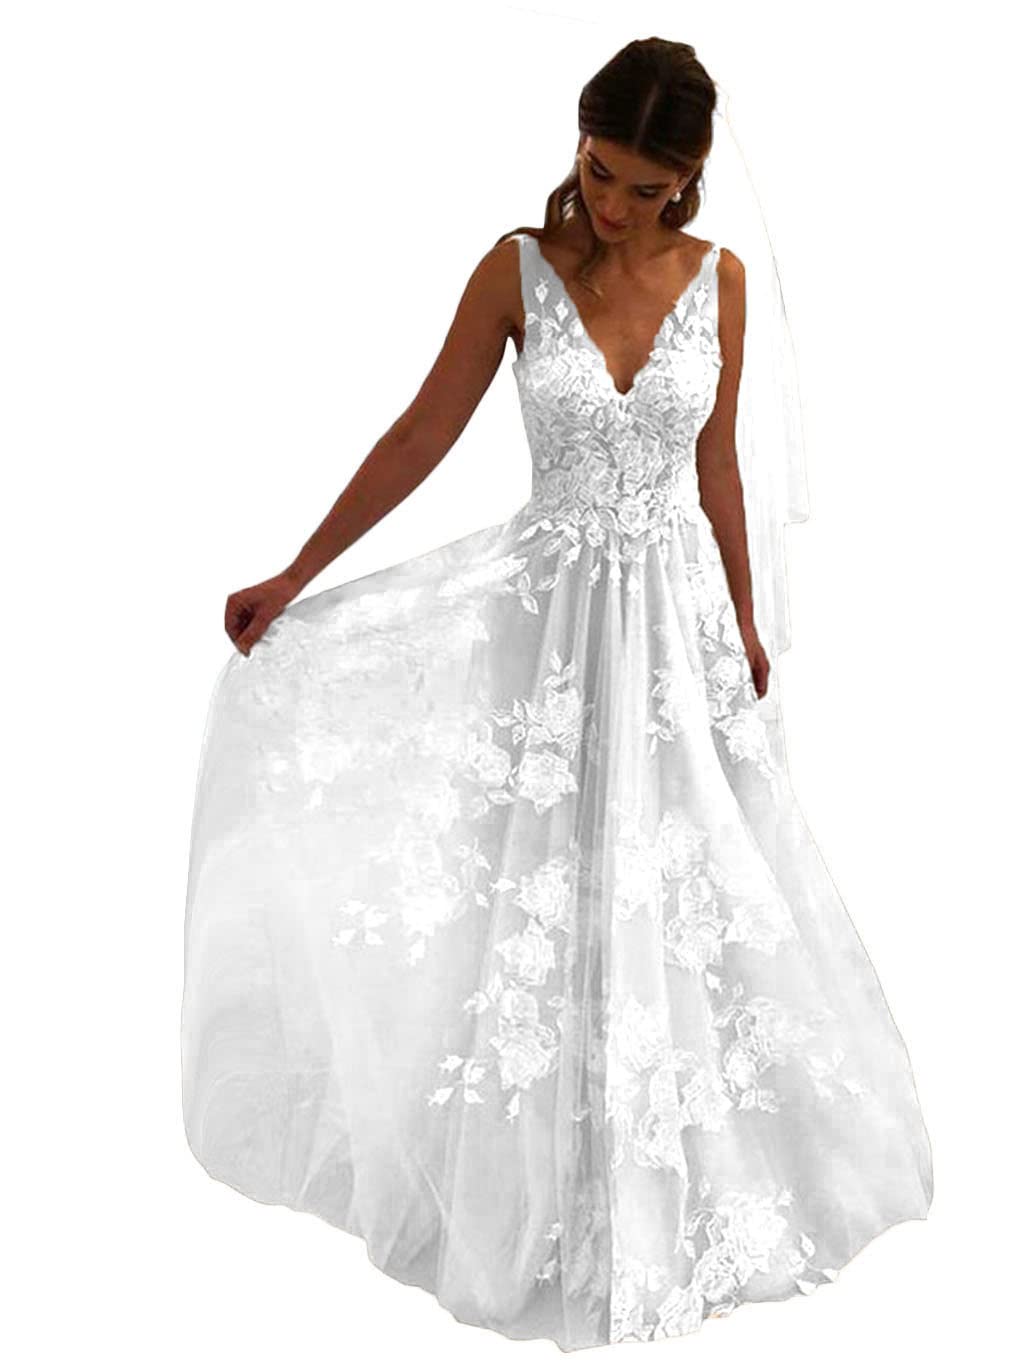 Tsbridal Women Wedding Dresses A-line V-Neck Tulle Lace Backless Boho Wedding Gown Bridal Dresses